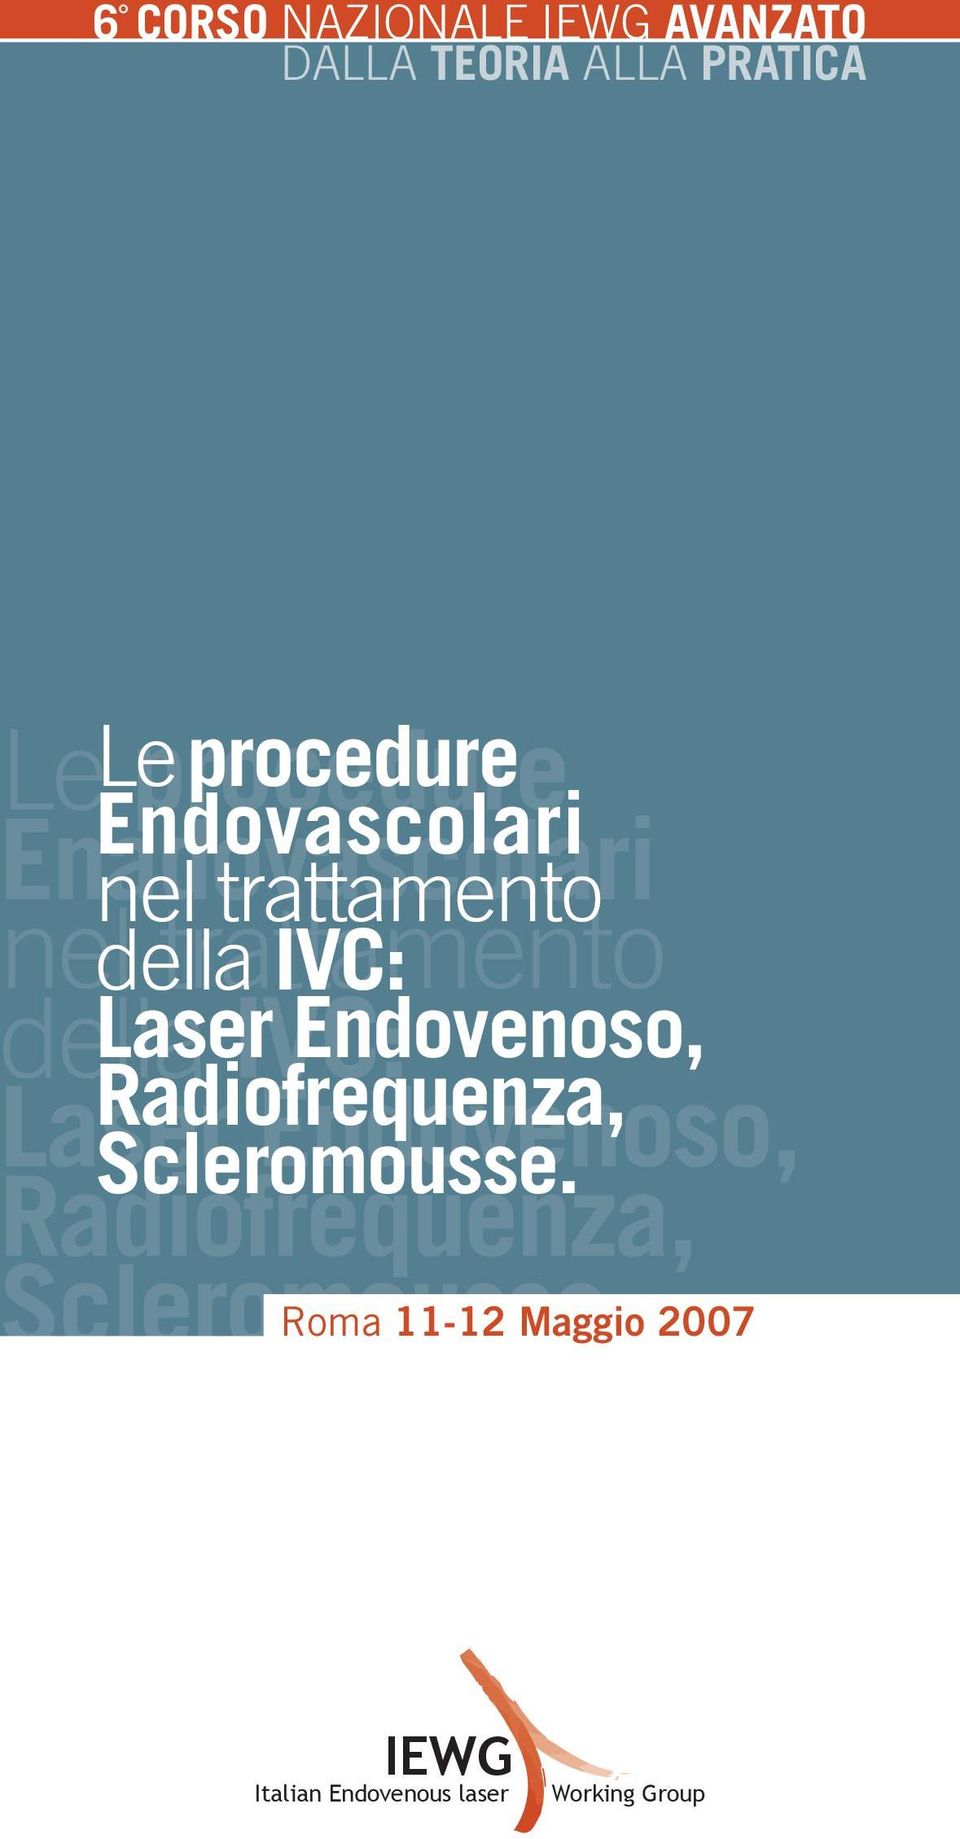 Laser IVC: Endovenoso, aser Radiofrequenza, Scleromousse.